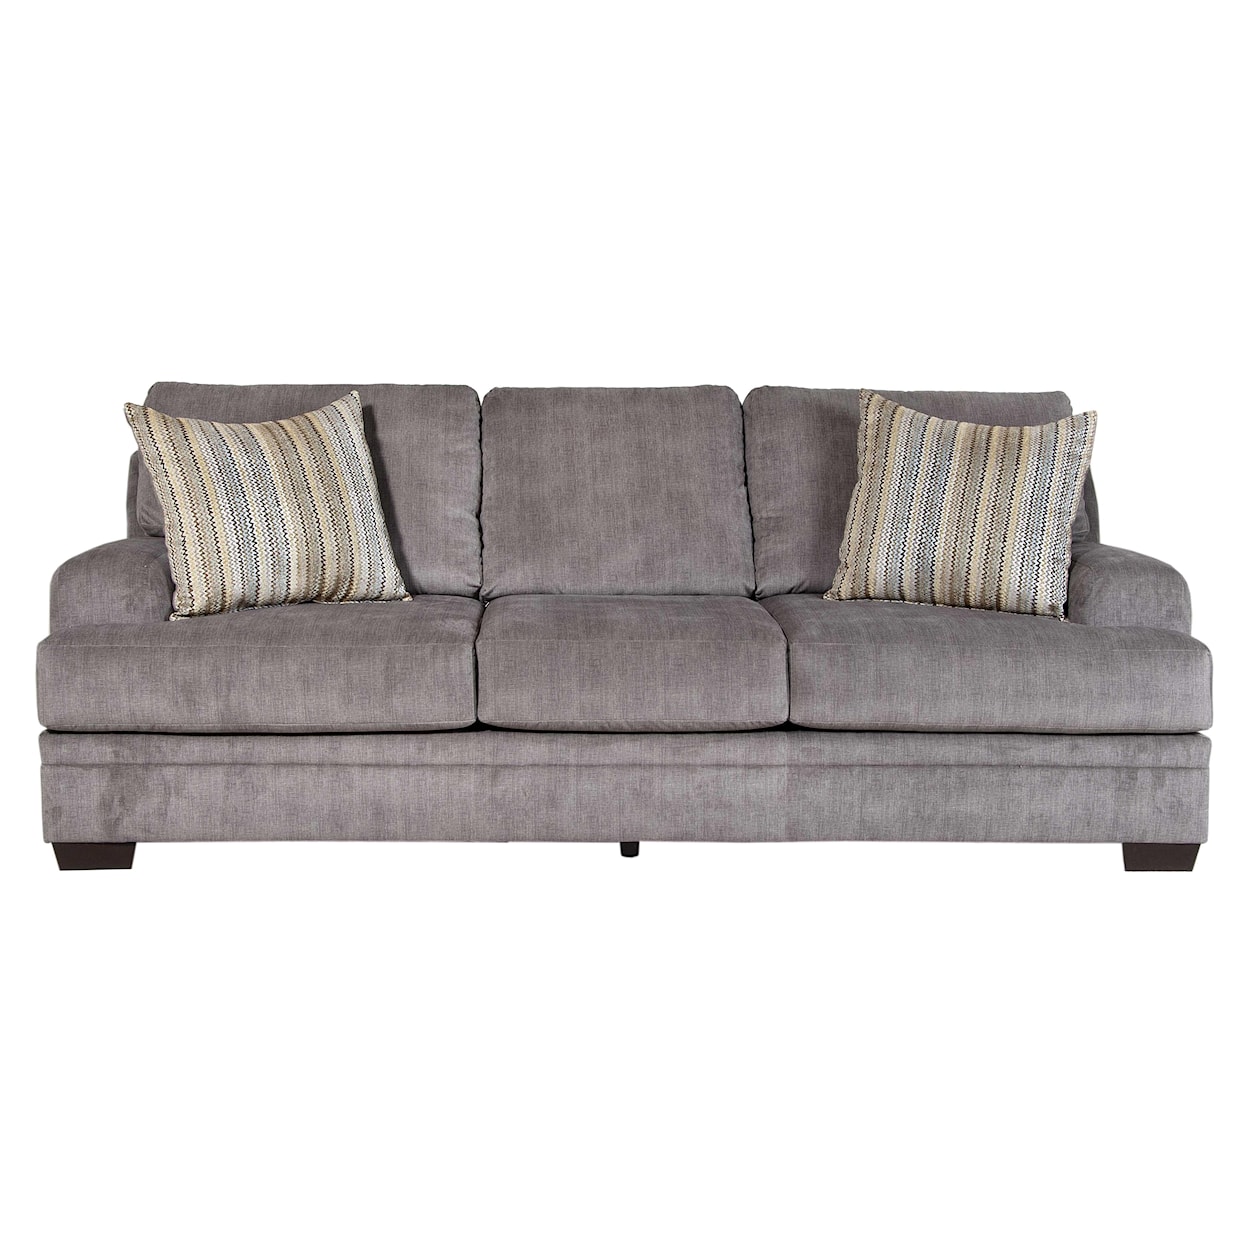 Serta Upholstery by Hughes Furniture 8800 Sofa